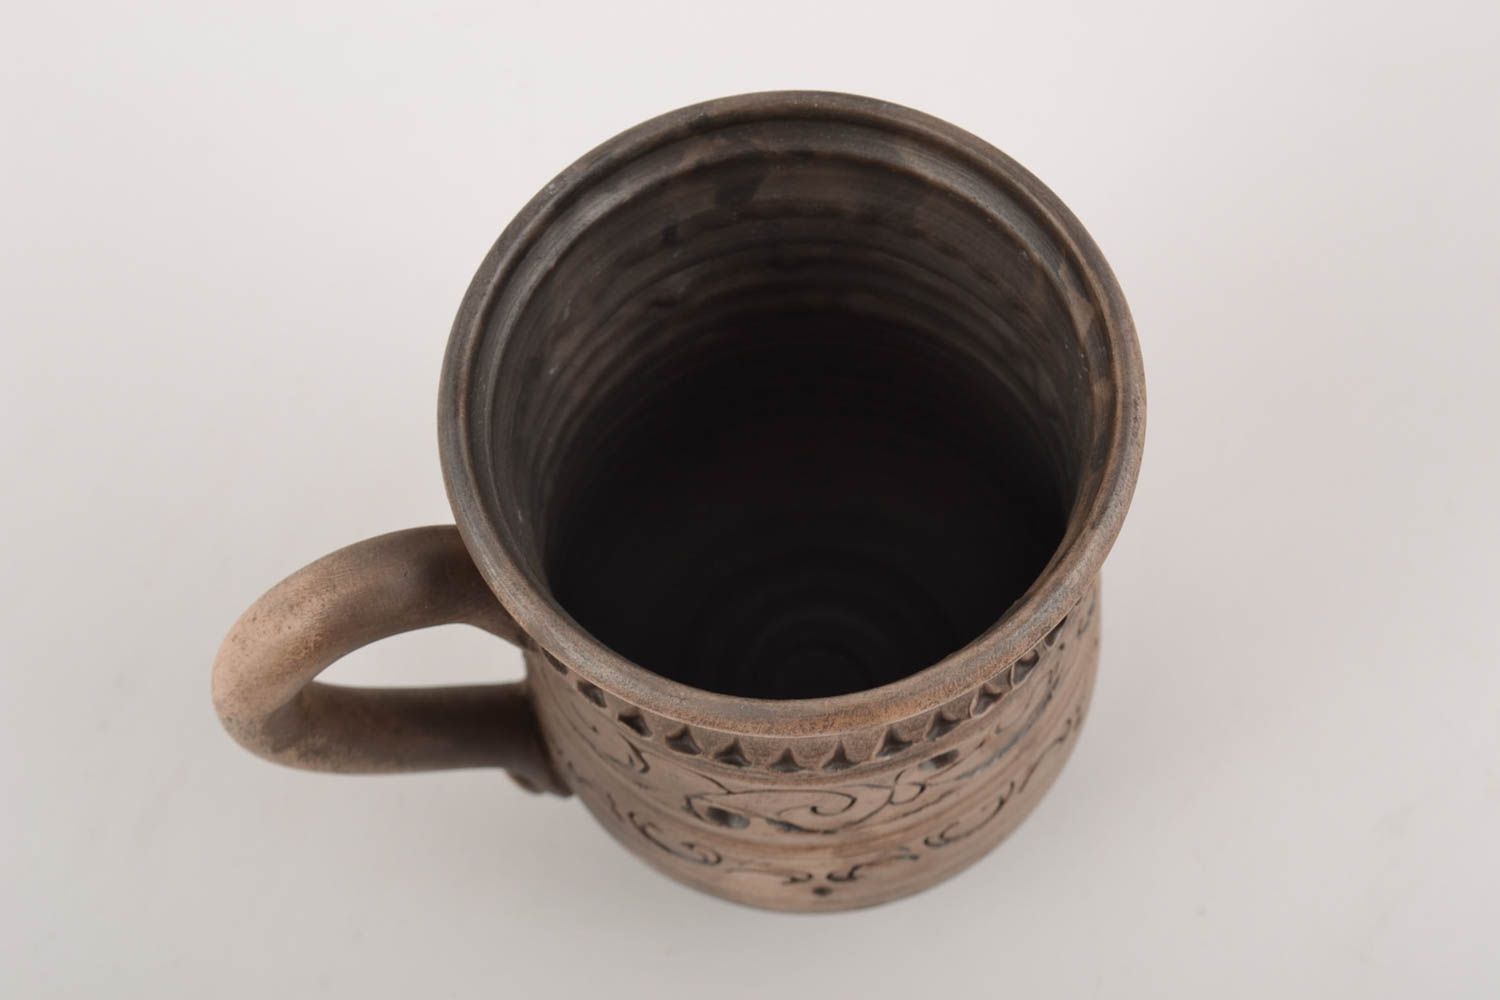 Extra-large 16 oz clay Italian-style coffee mug with handle photo 2